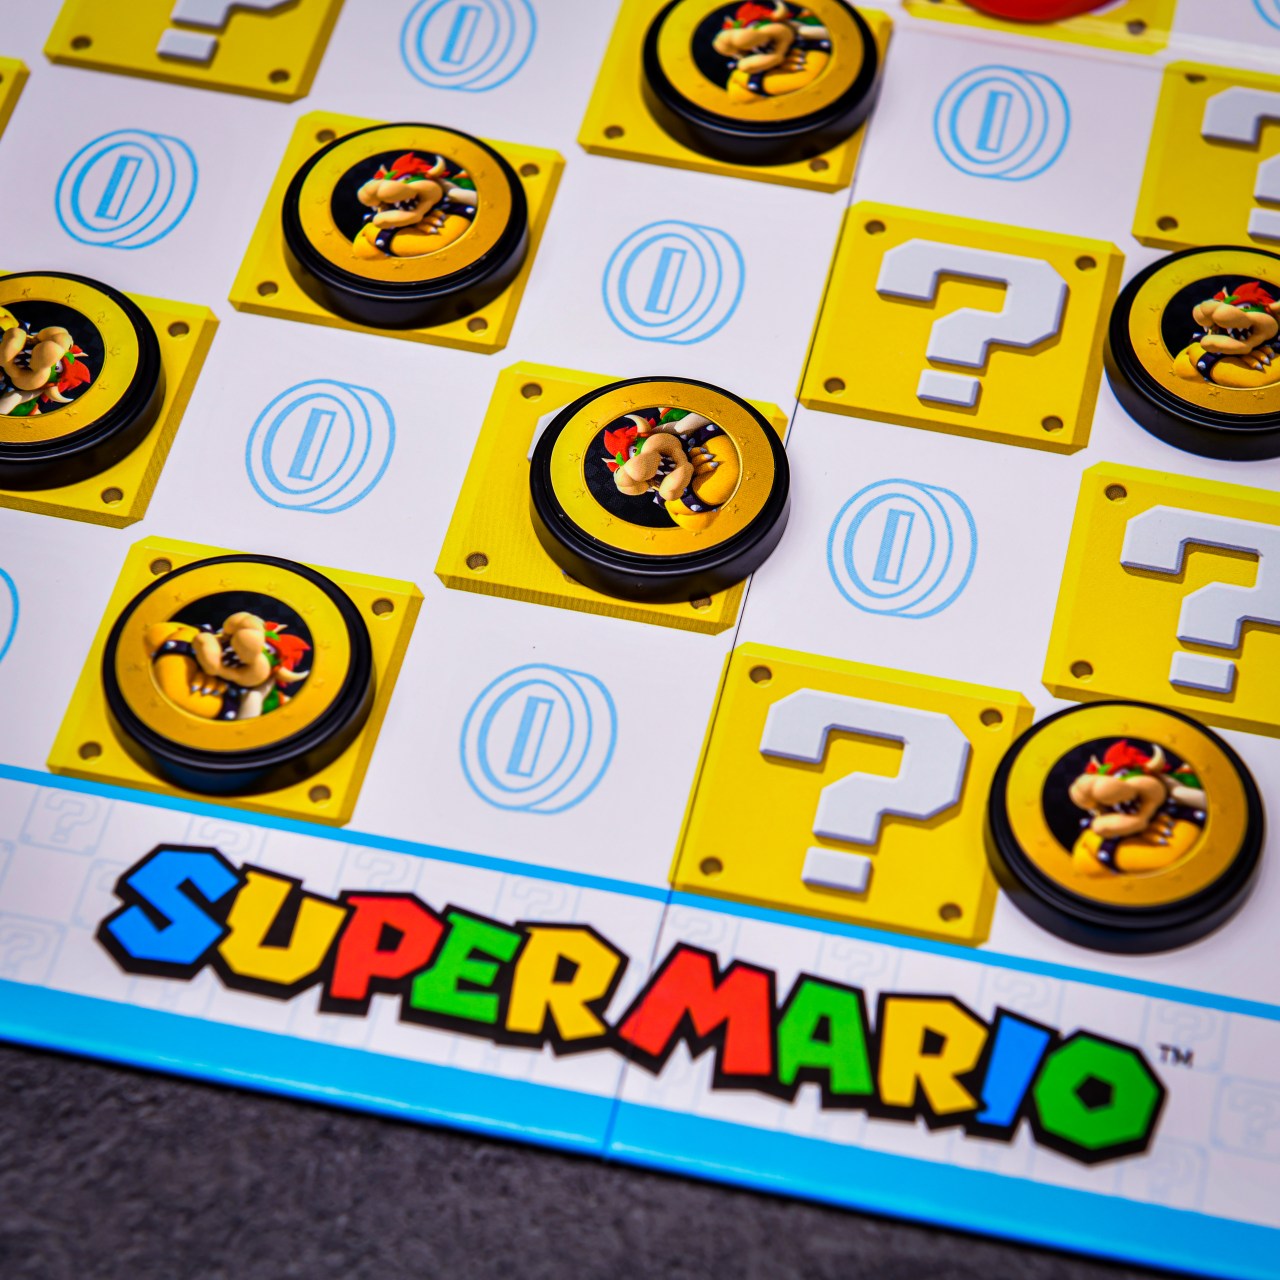 Super Mario Boardgame Checkers & Tic-Tac-Toe - Dáma Super Mario